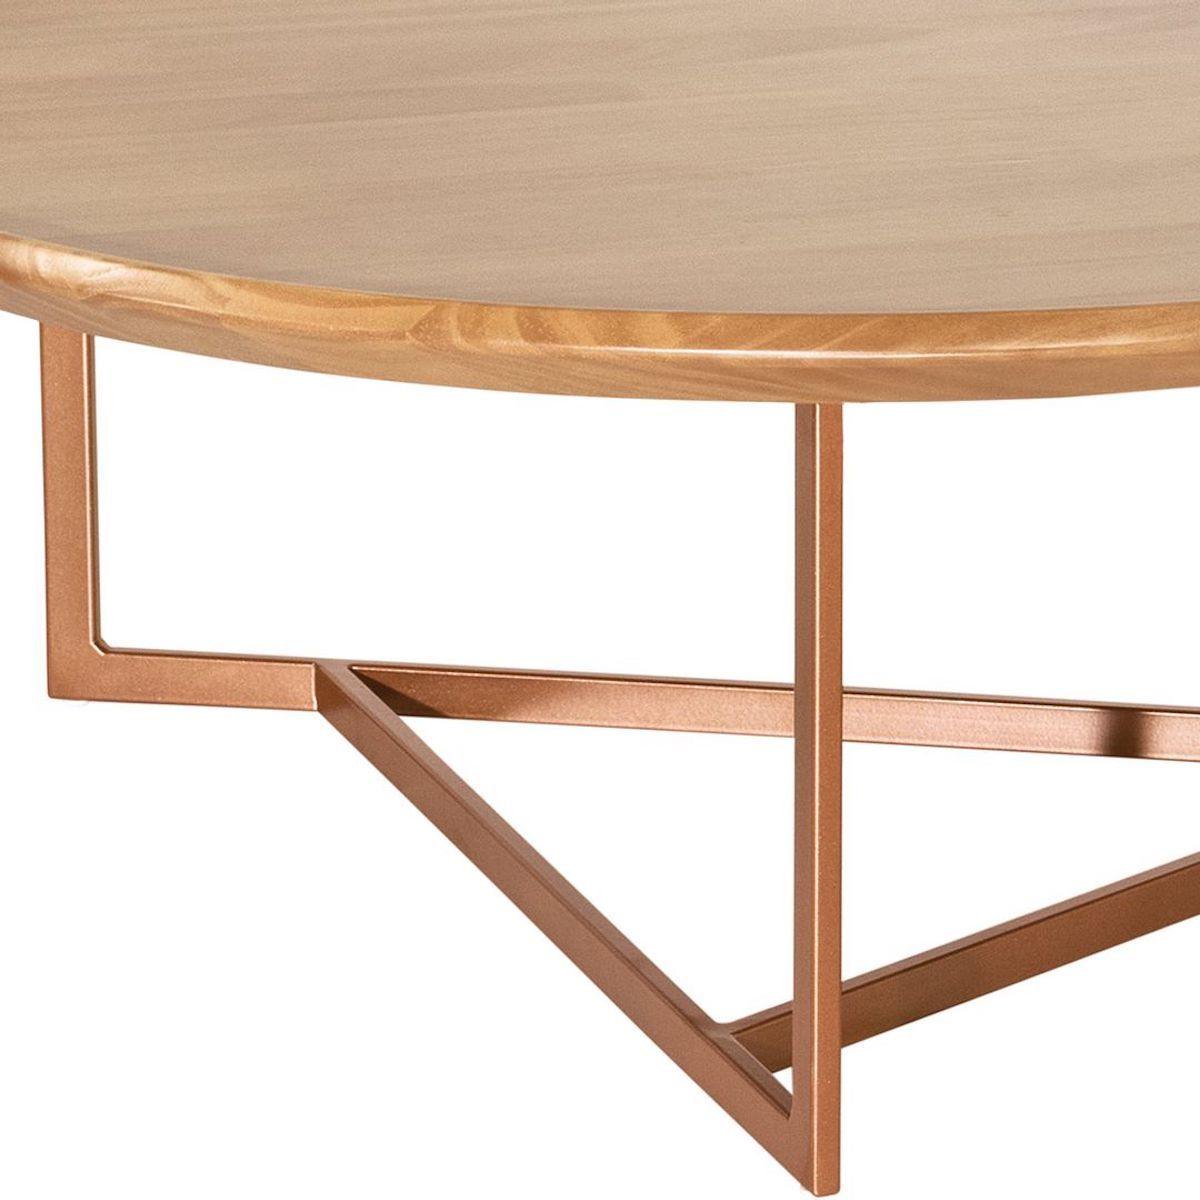 Manhattan Comfort Knickerbocker 31.88" Modern Round Coffee Table with Steel Base in Cinnamon 254351 Legs